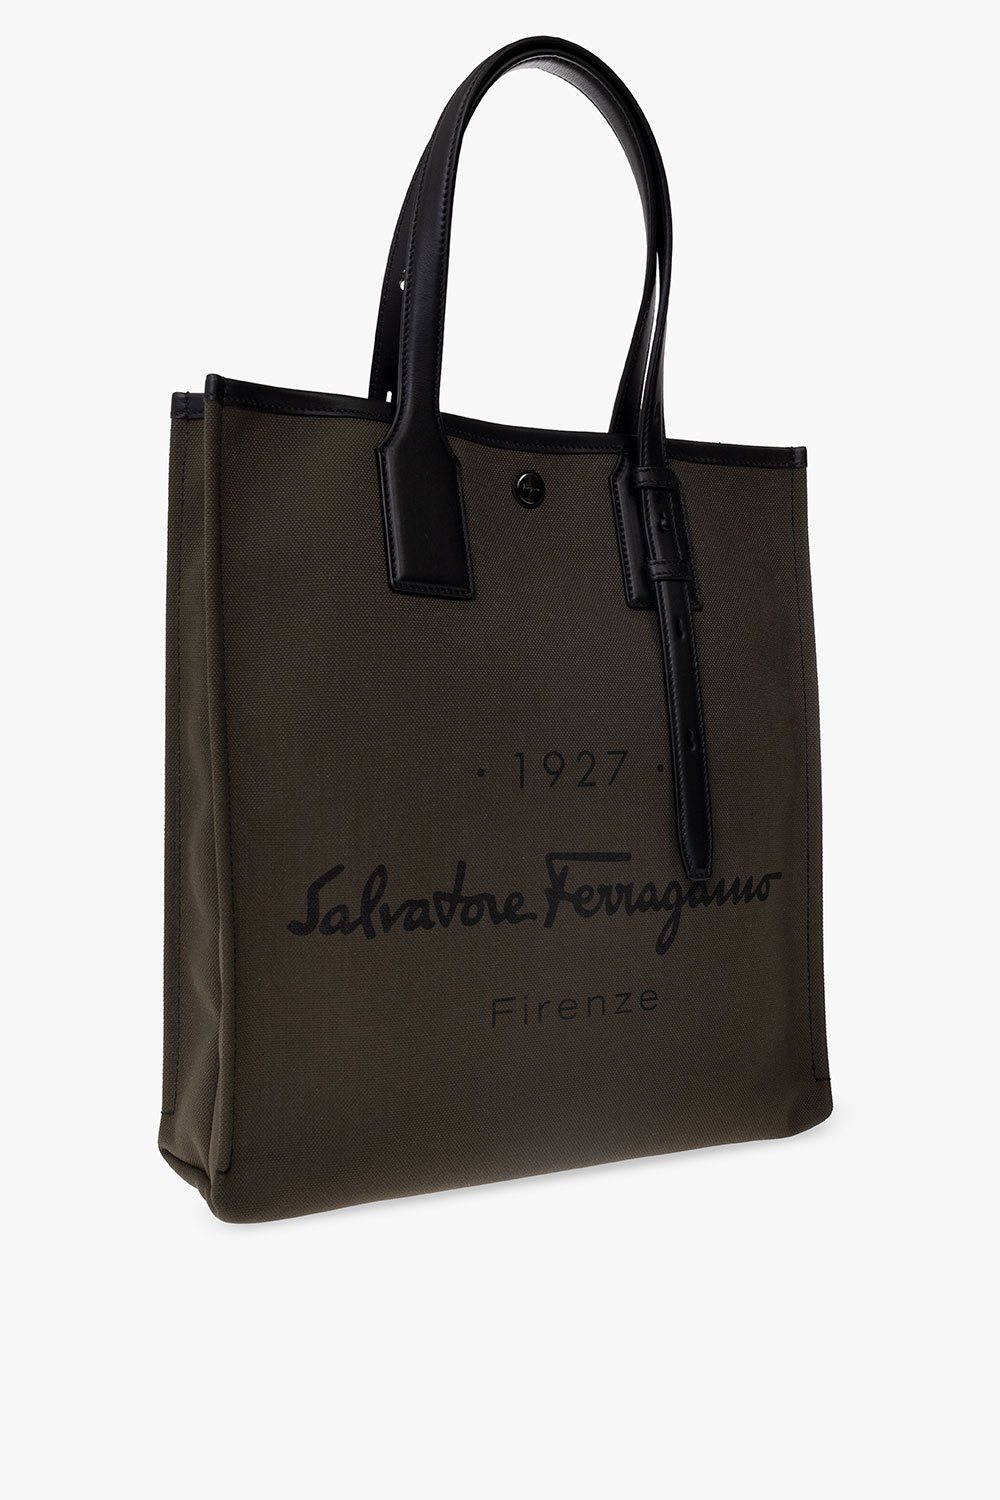 FERRAGAMO ‘1927 Signature’ shopper bag